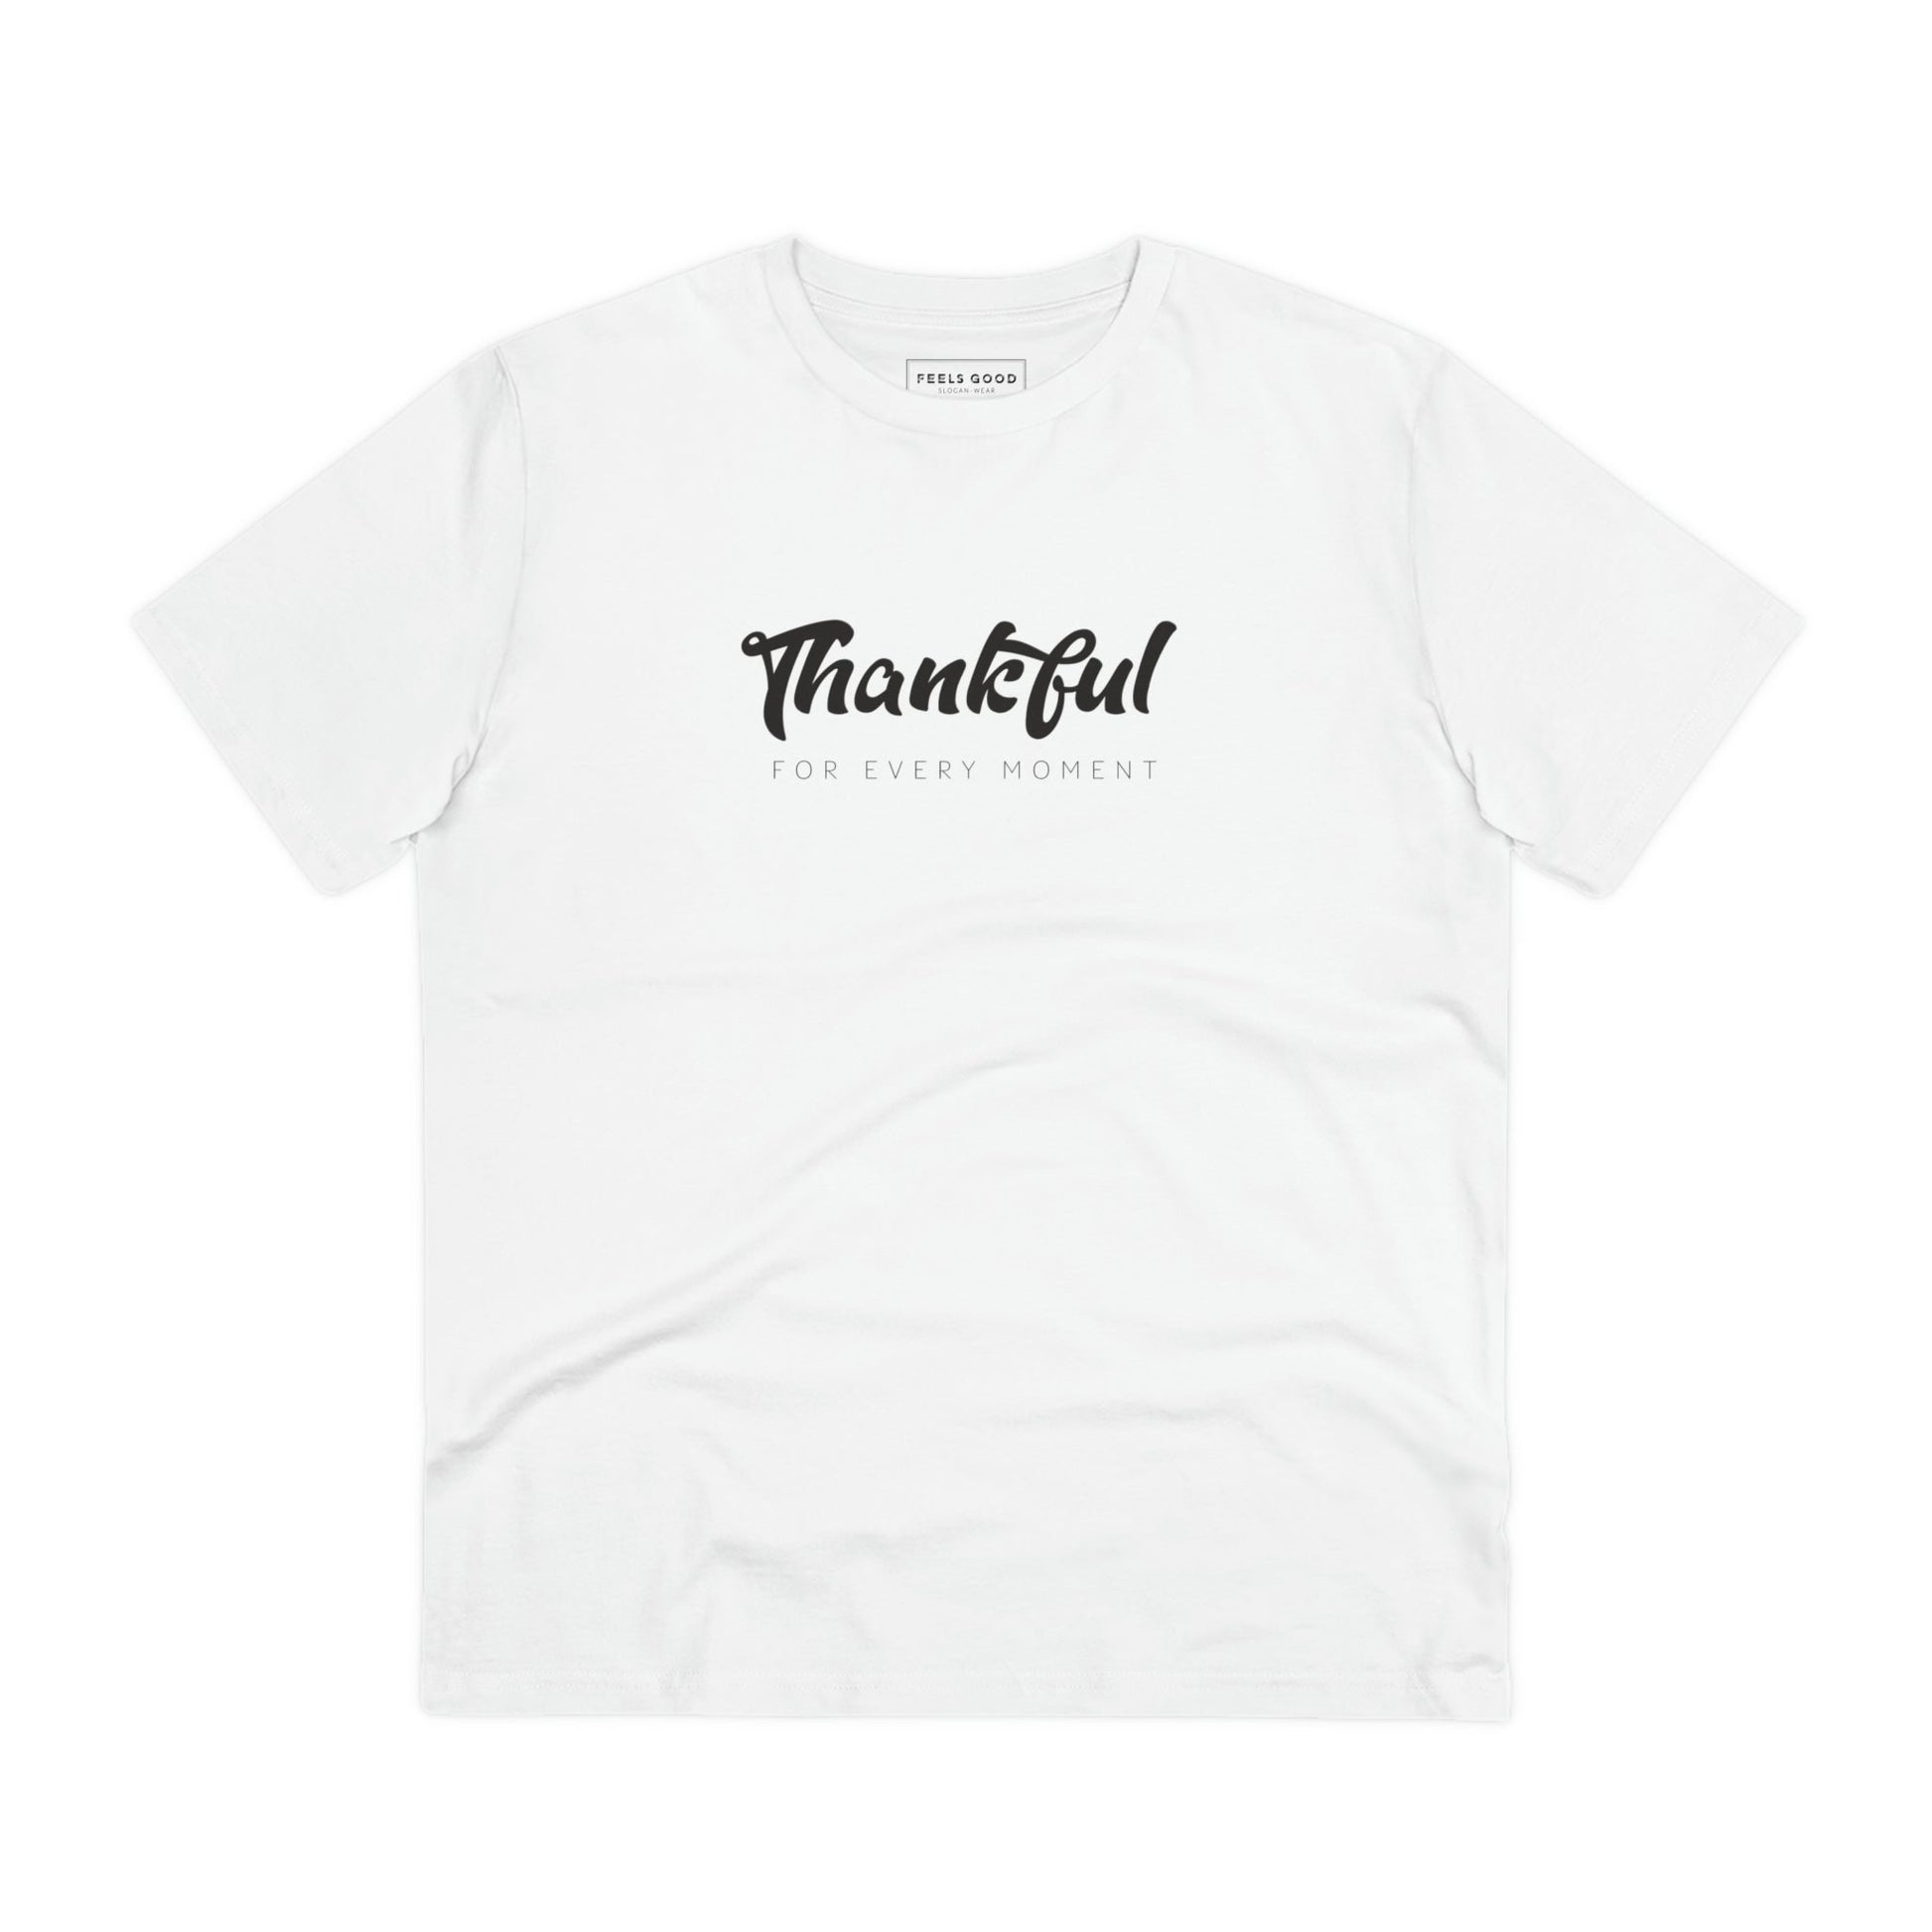 Positive 'Thankful' Organic Cotton T-shirt - Fun Tshirt